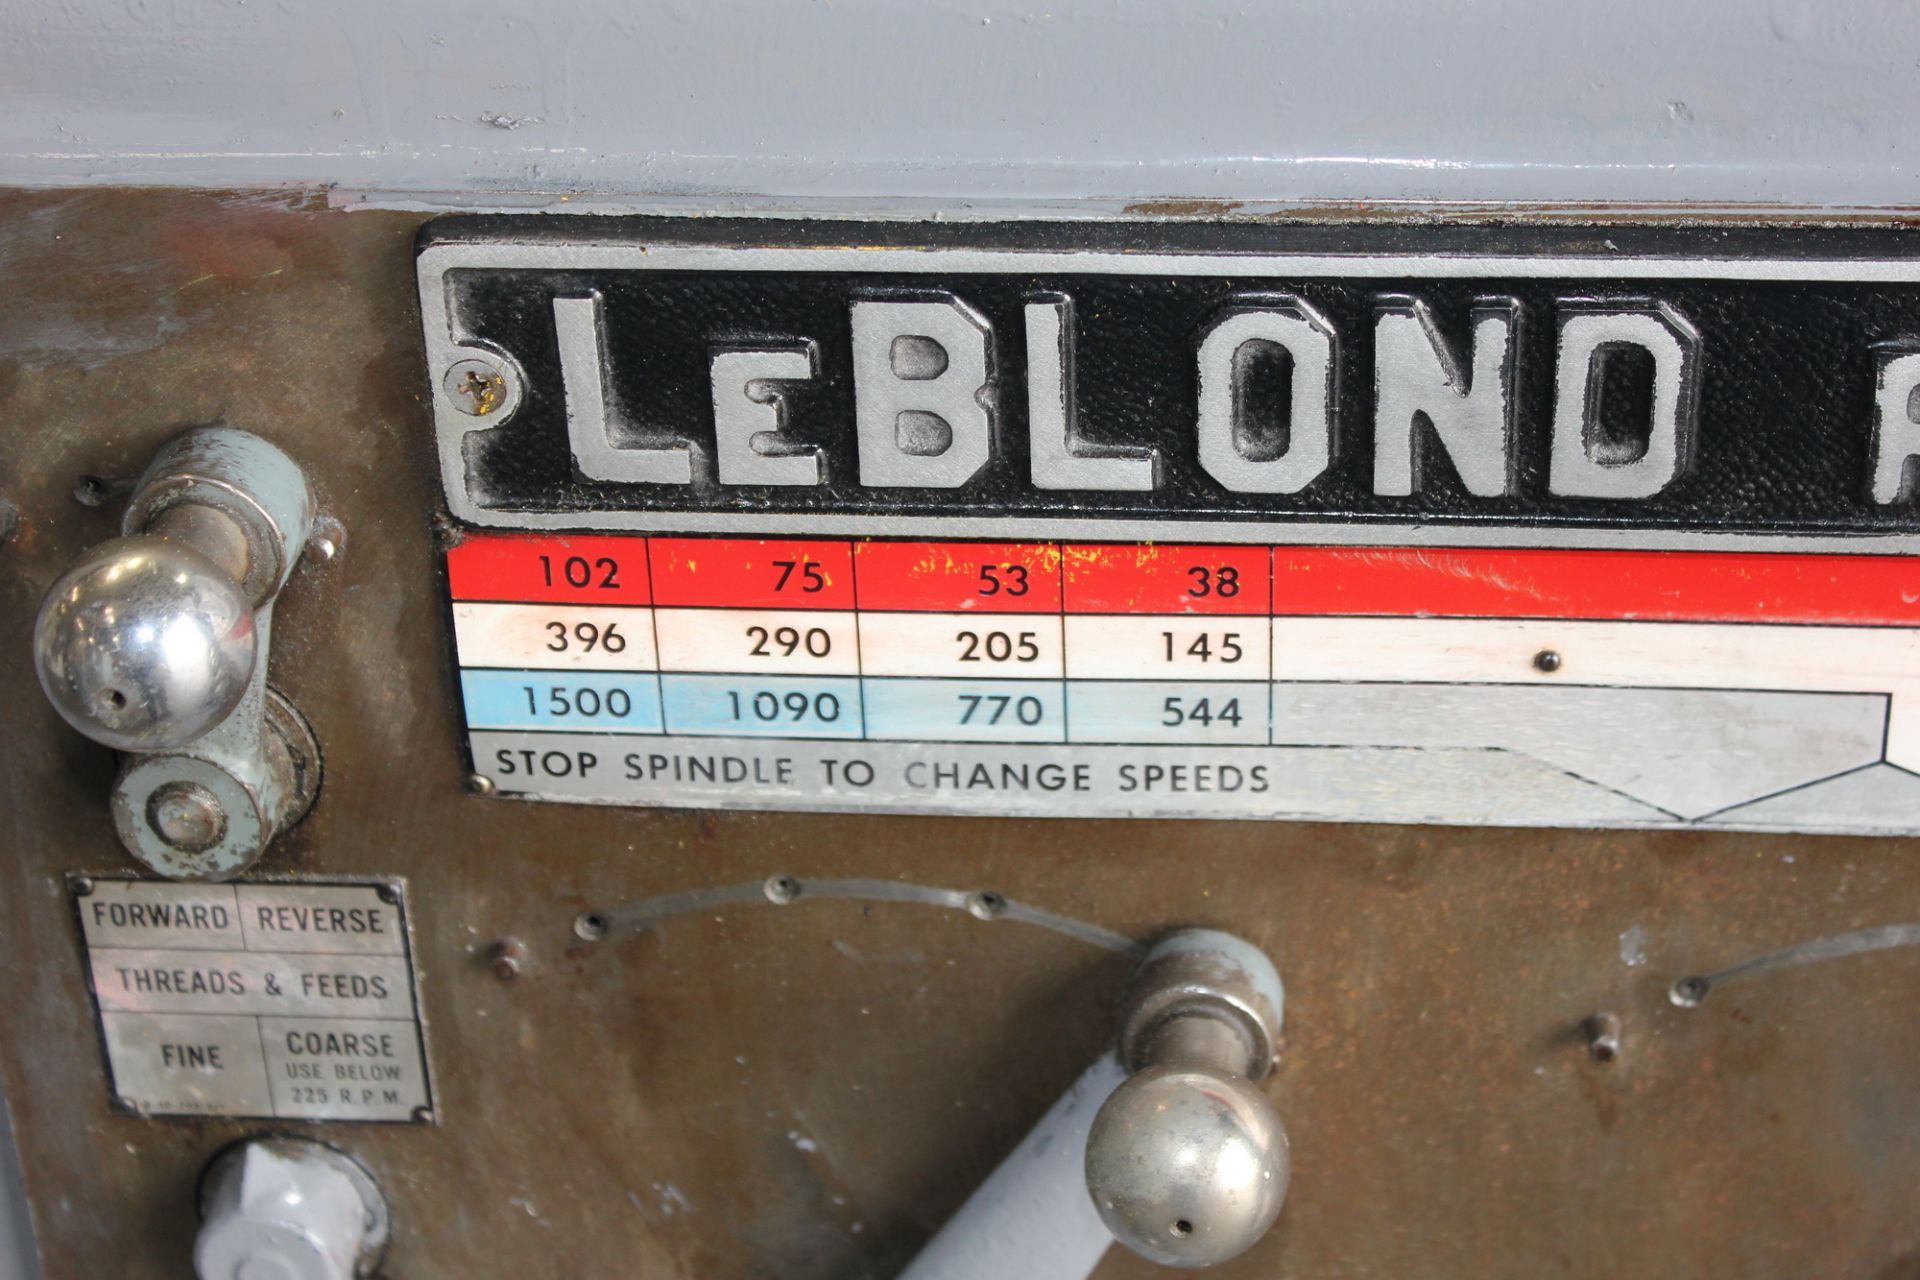 LeBlond Regal 2D17 17” x 54” Geared Head Lathe s/n 2D824 w/ 38-1500 RPM,Taper Attachment, SOLD AS IS - Image 5 of 15